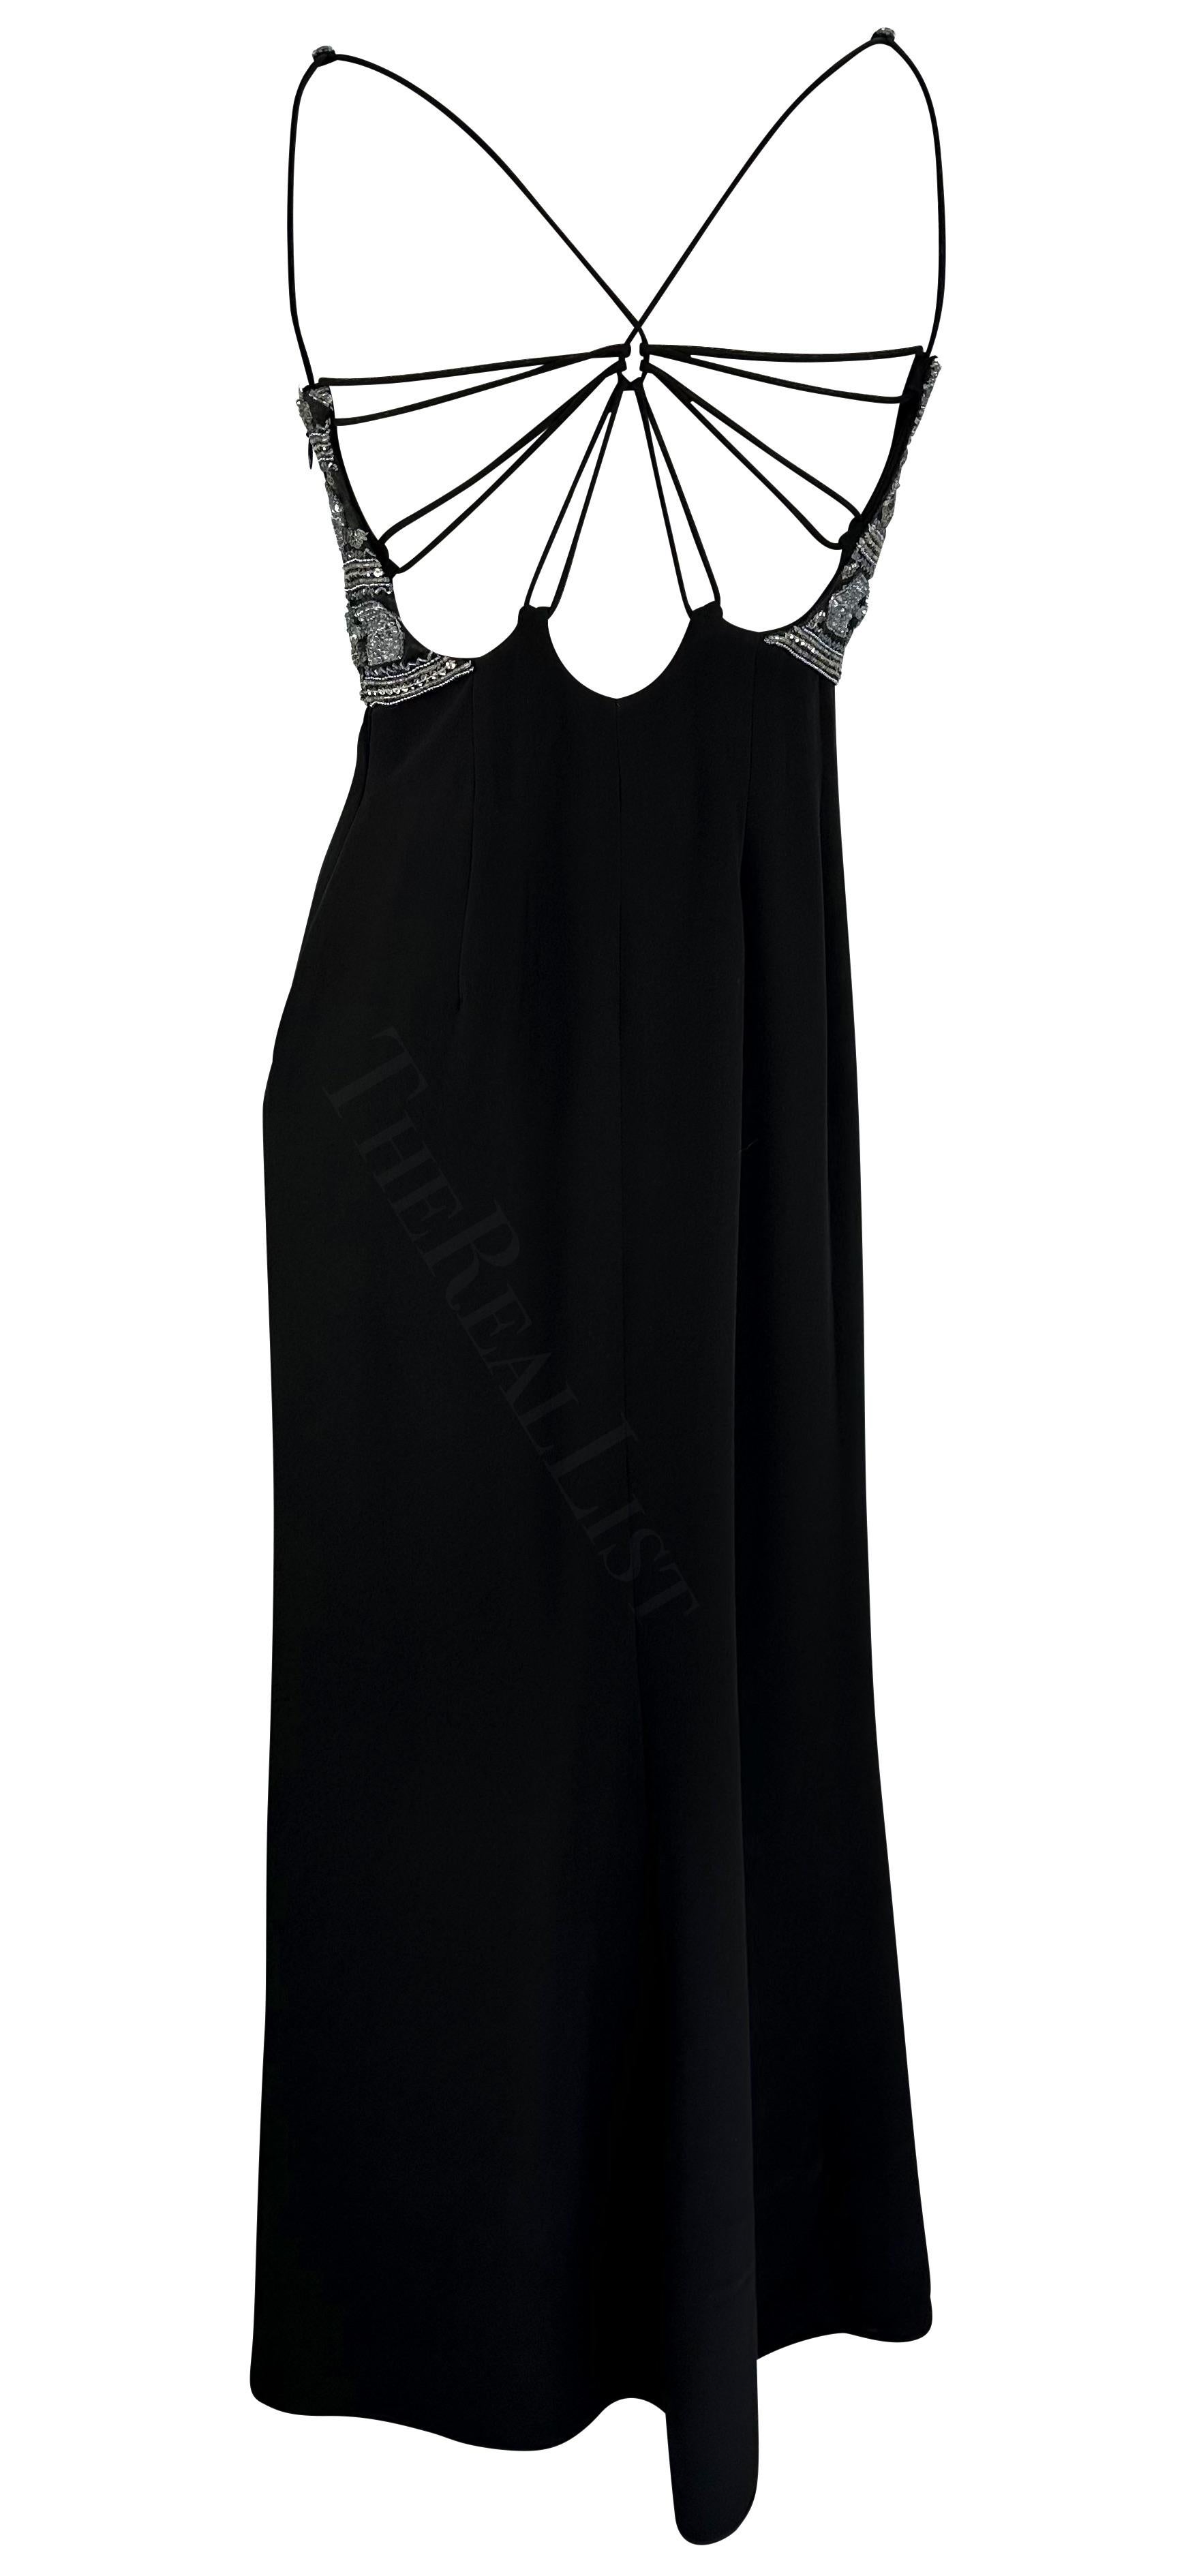 S/S 1996 Giorgio Armani Backless Black Silver Beaded Dress For Sale 1